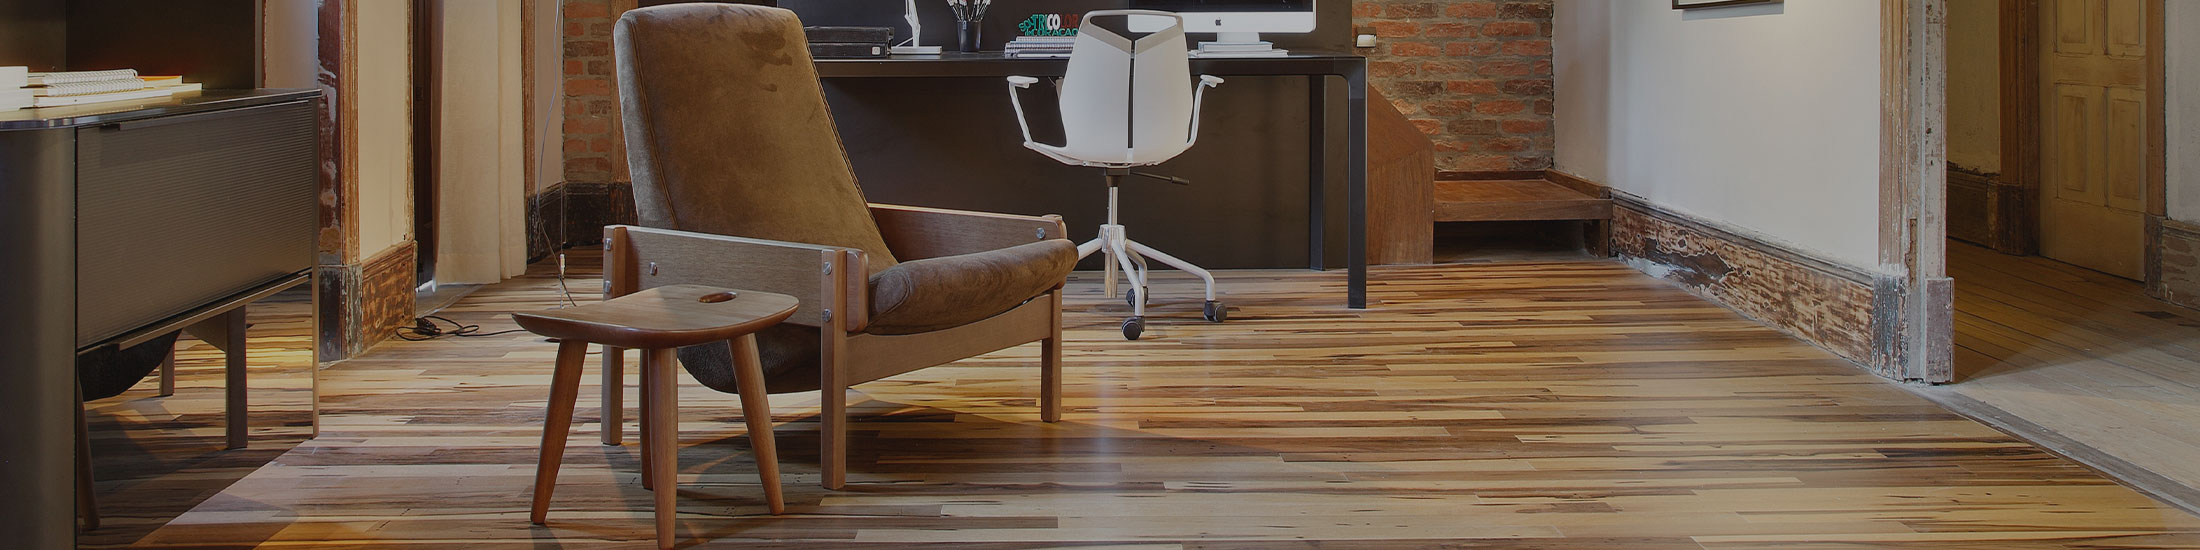 image of hardwood flooring